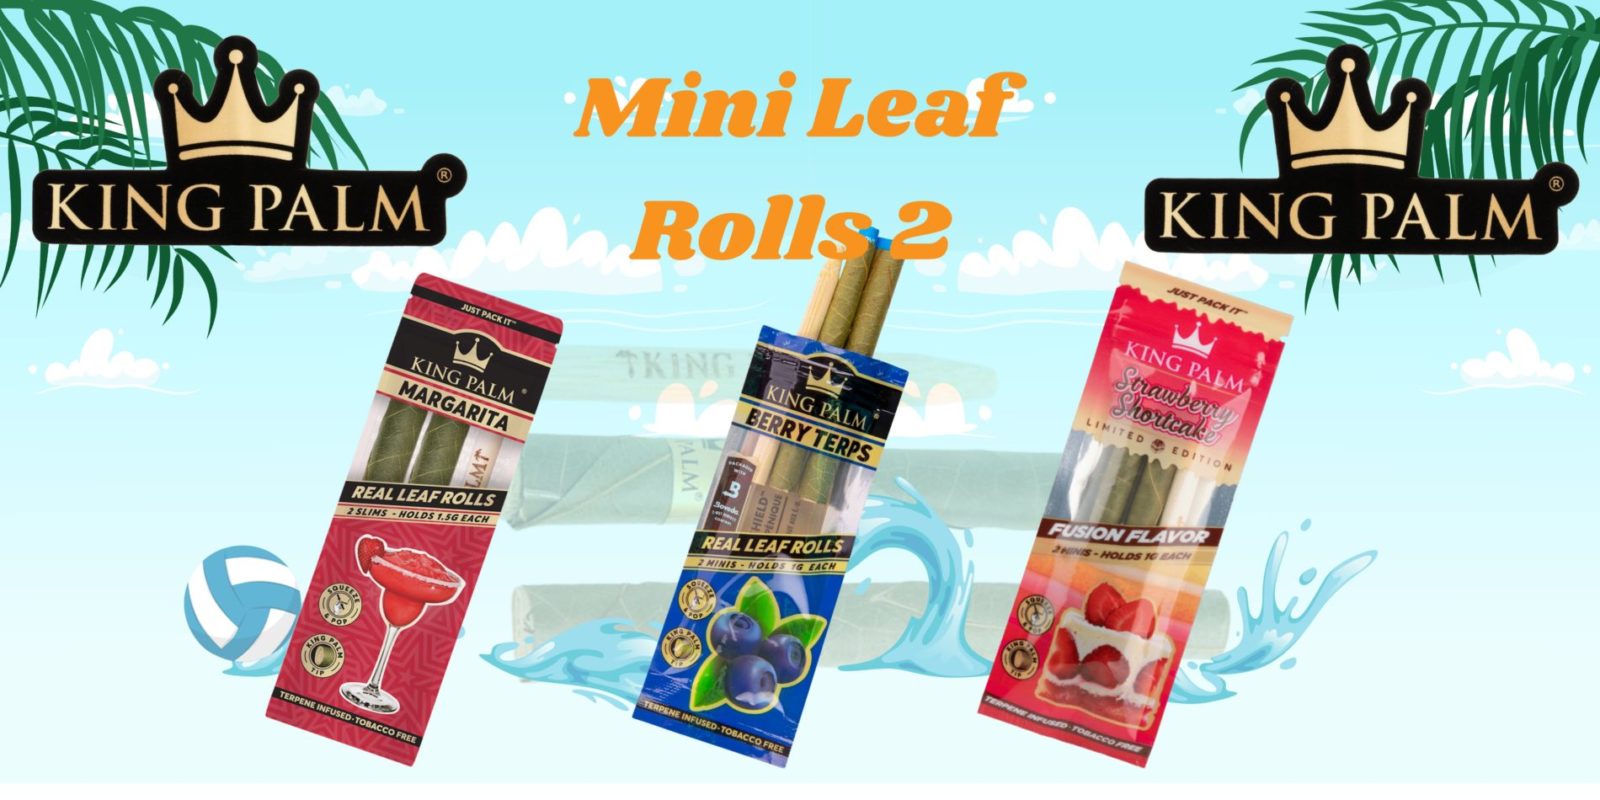 King Palm Mini Leaf Rolls 2 – Berry Terps 420 SUPPLIES - XMANIA Ireland 14